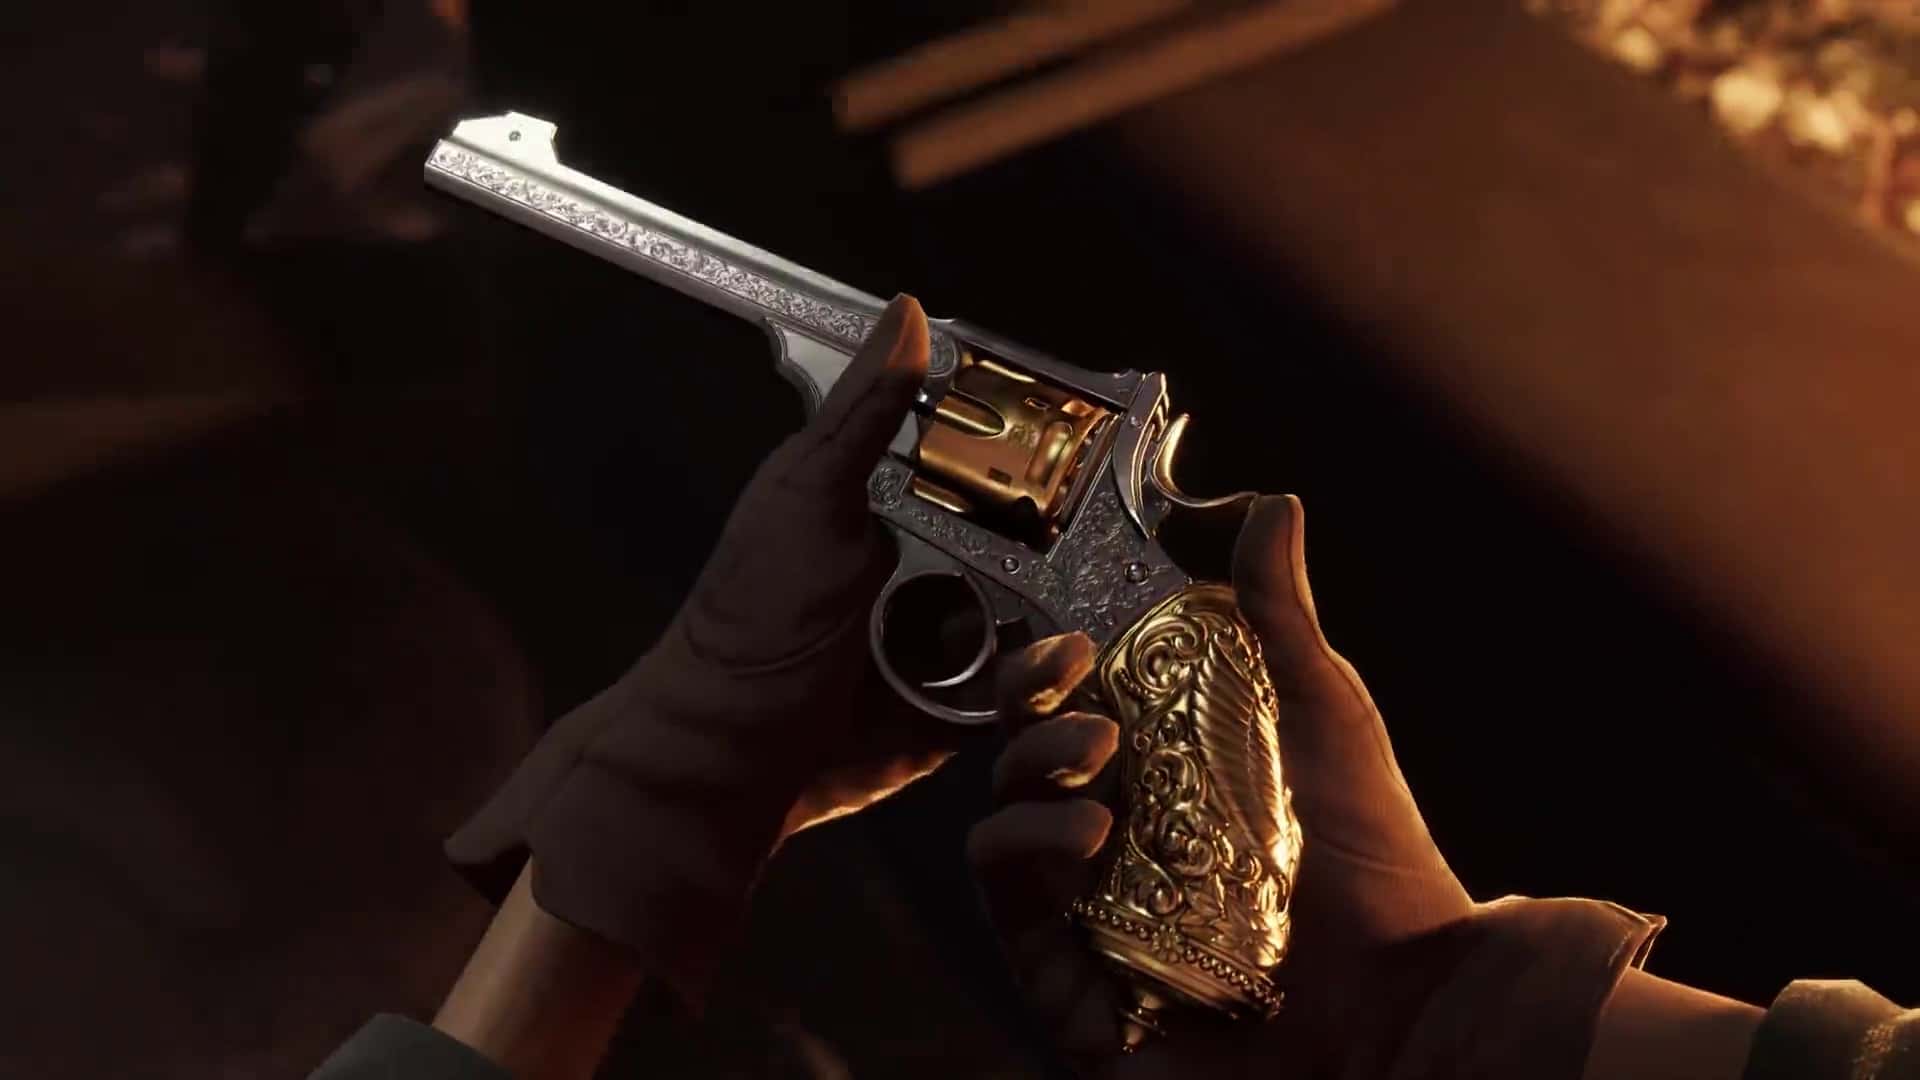 (In Nightingale kun je je eigen wapens maken, zoals deze mooie glimmende revolver.)